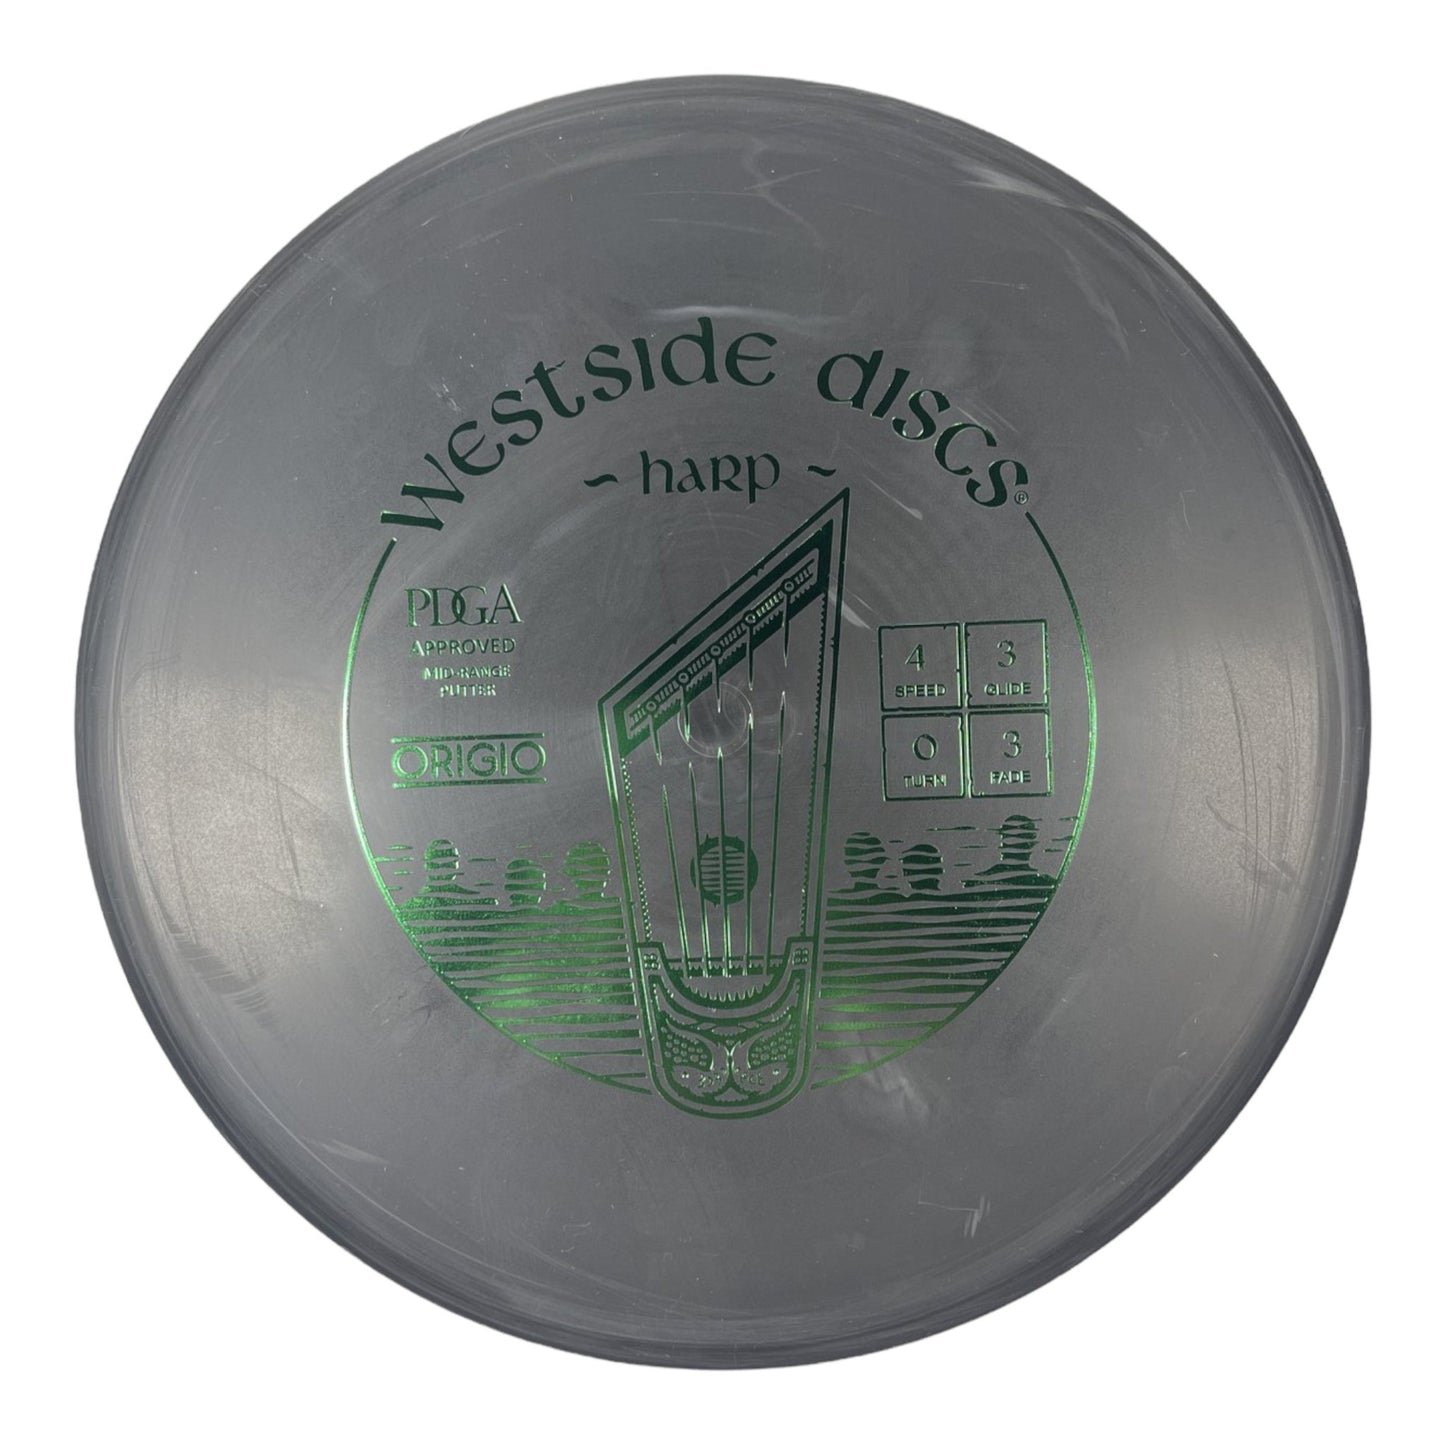 Westside Discs Harp | Origio | Black/Green 174g Disc Golf